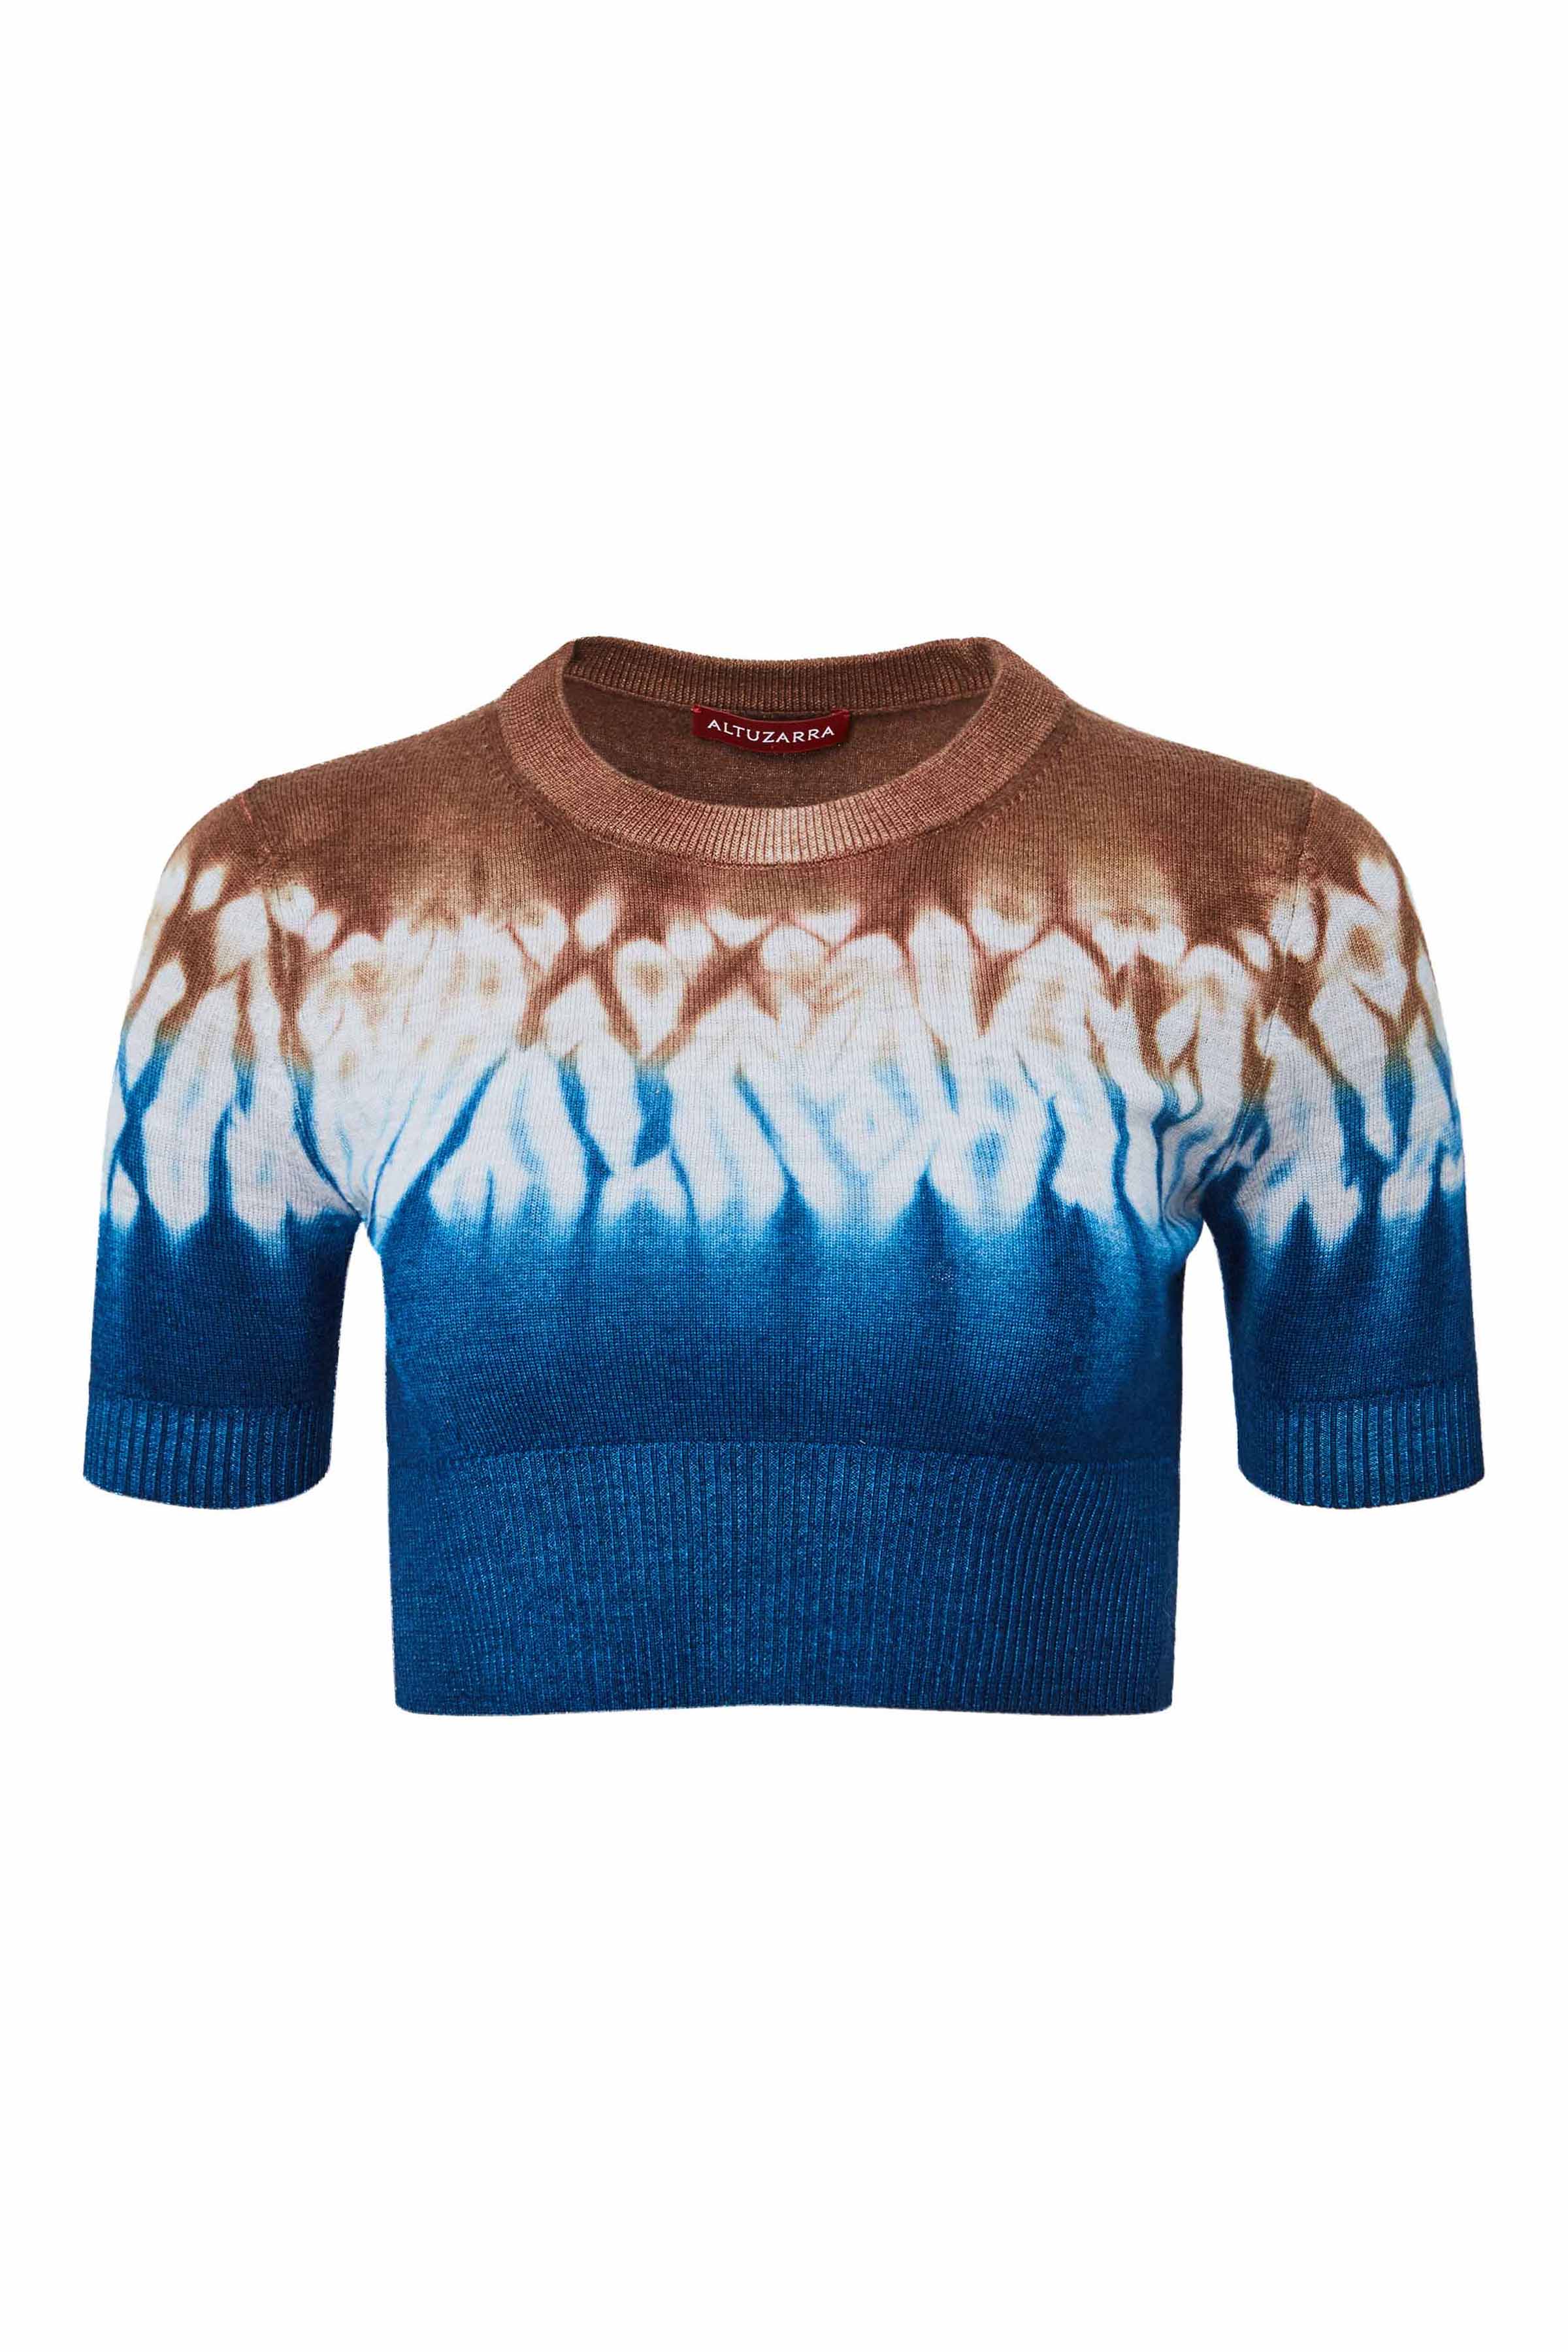 'Nicholas' Sweater